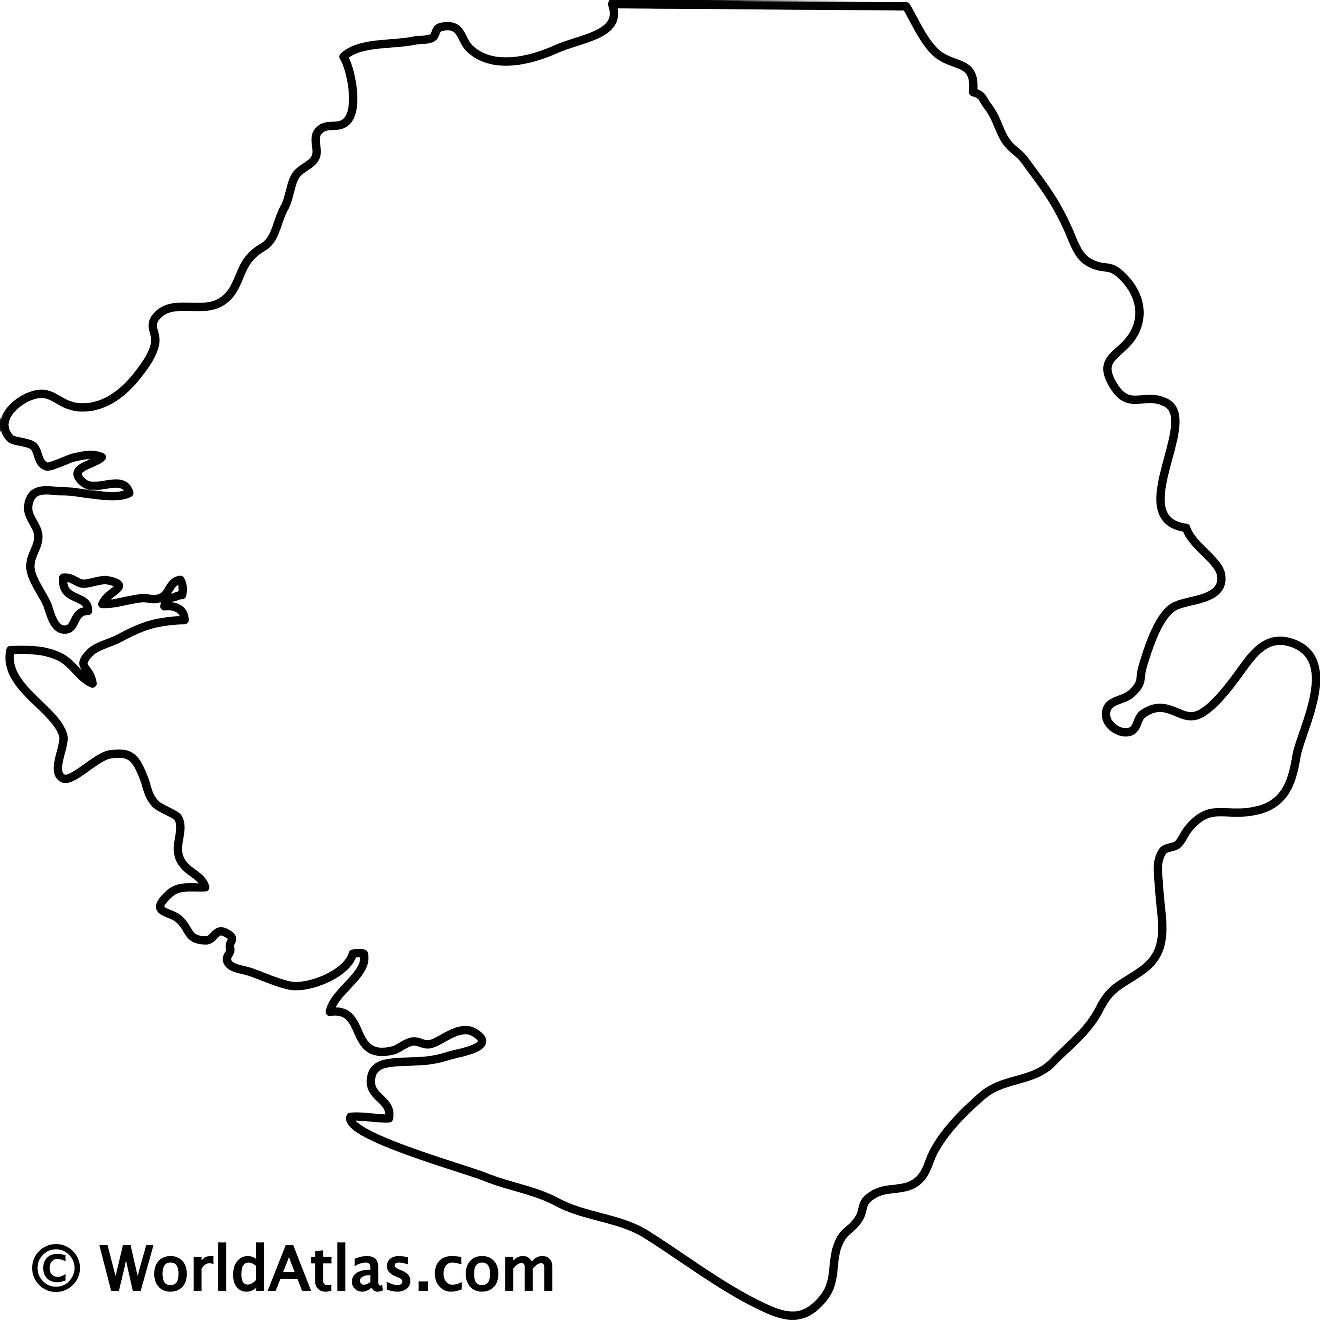 Blank Outline Map of Sierra Leone